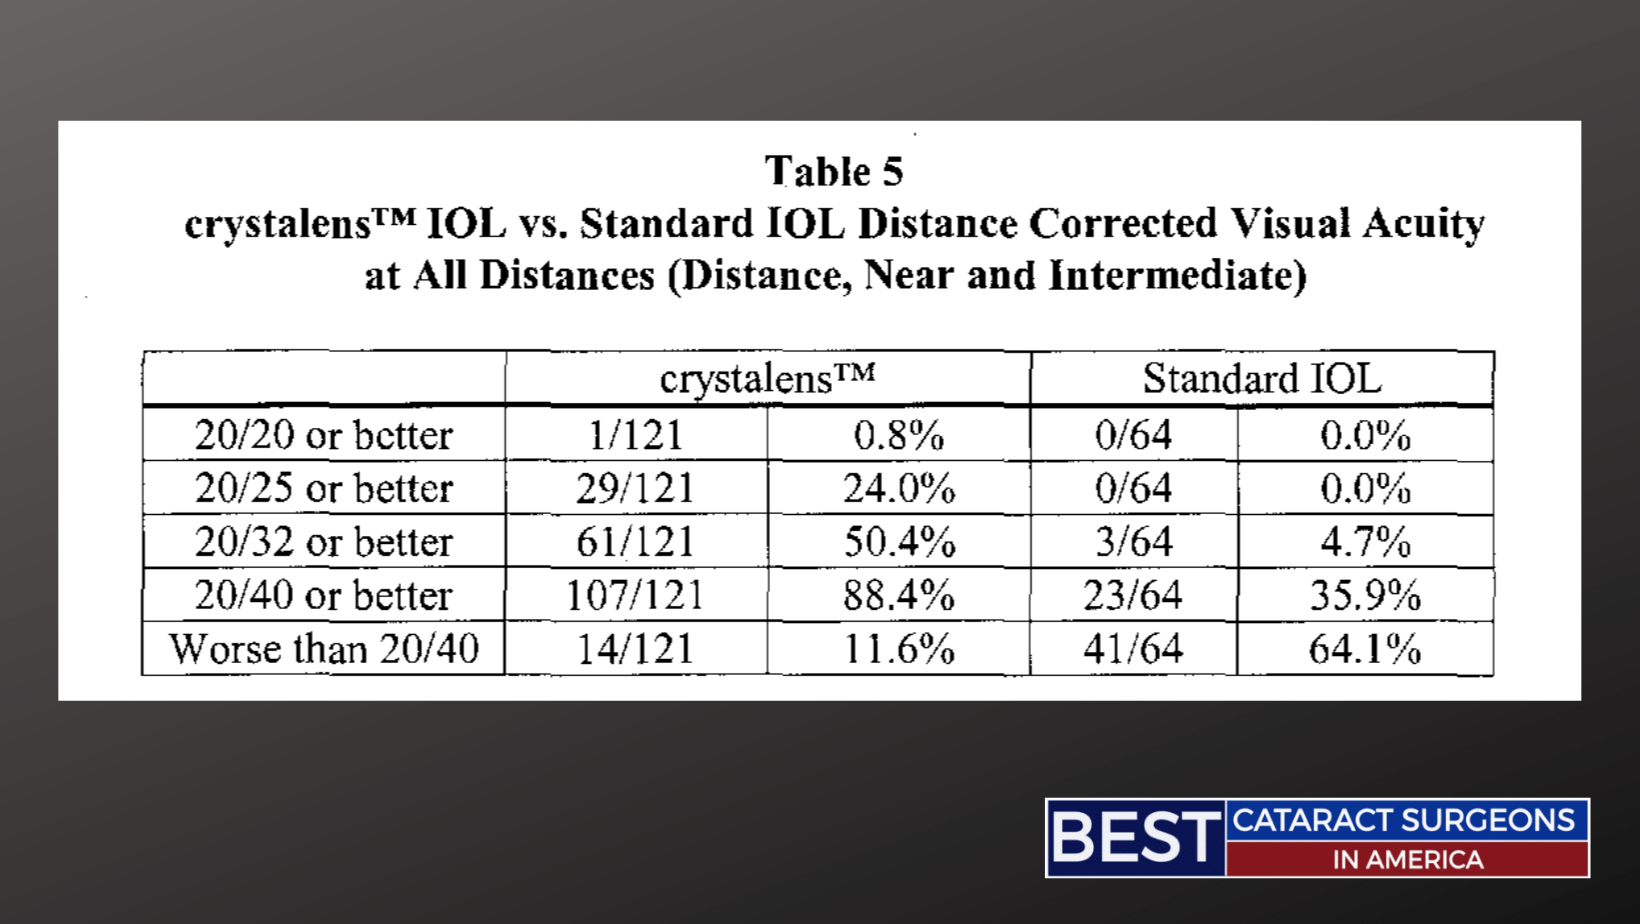 Crystalens vs Standard IOL data table